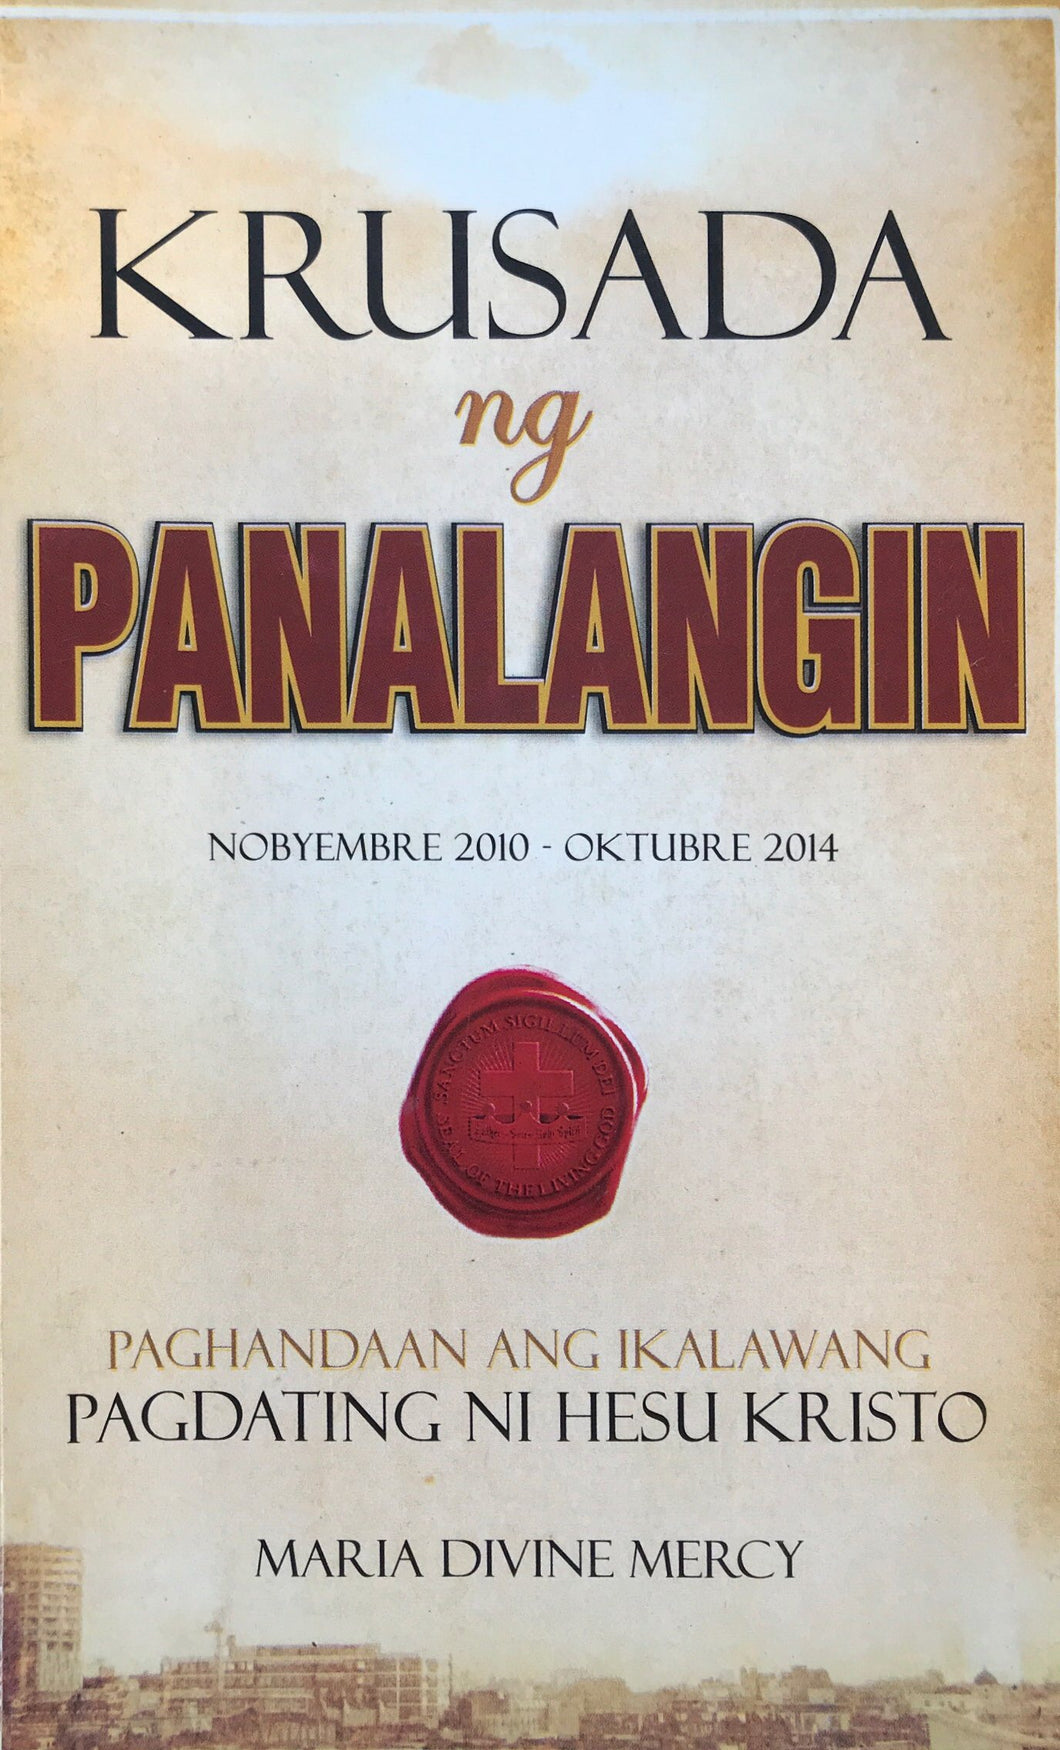 The Crusade of Prayer (Tagalog)